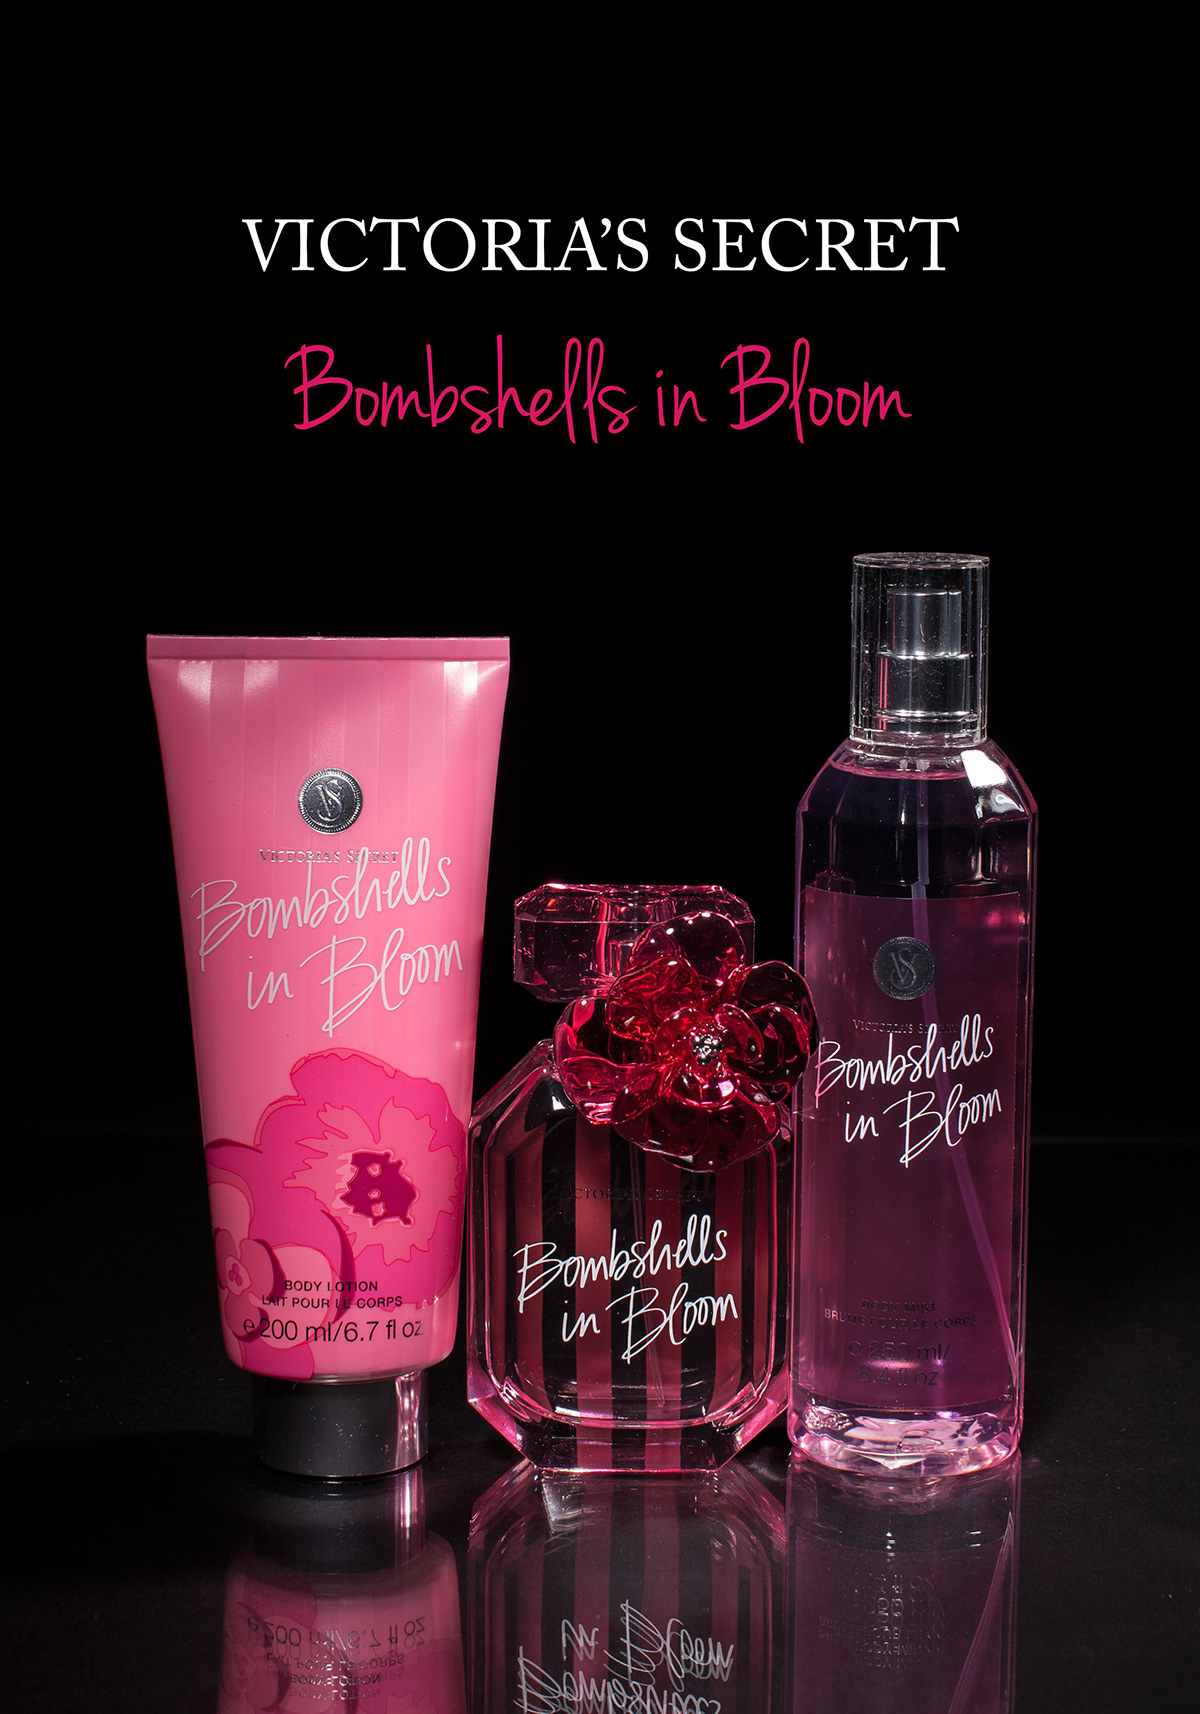 victoriassecret victoria's secret Victoria's Secret bombshells in bloom Fragrance pink flower floral lotion perfume mist vs